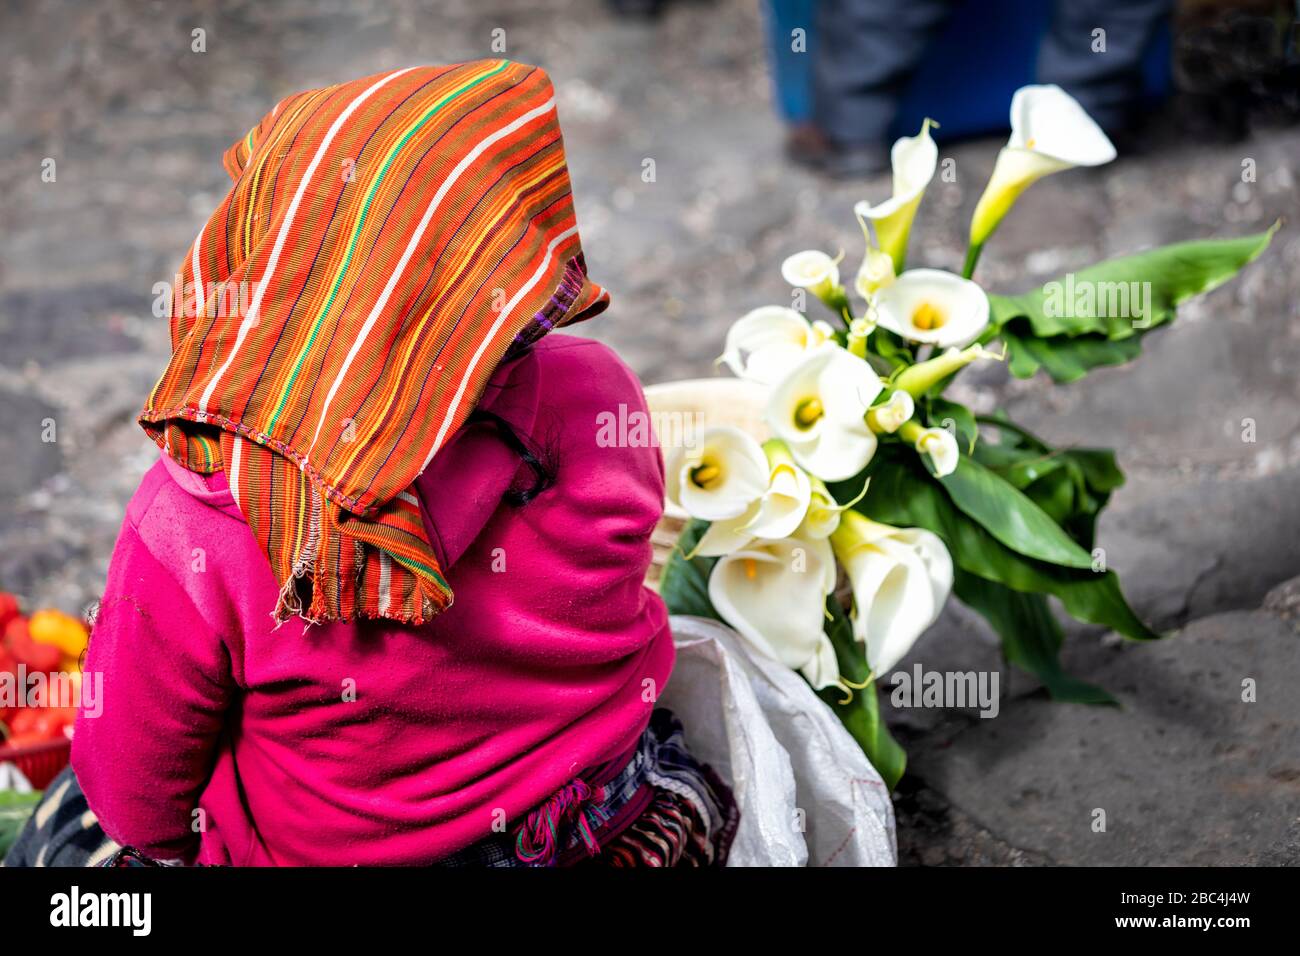 A woman sells calla lilies in the Chichicastenango, Guatemala market. Stock Photo